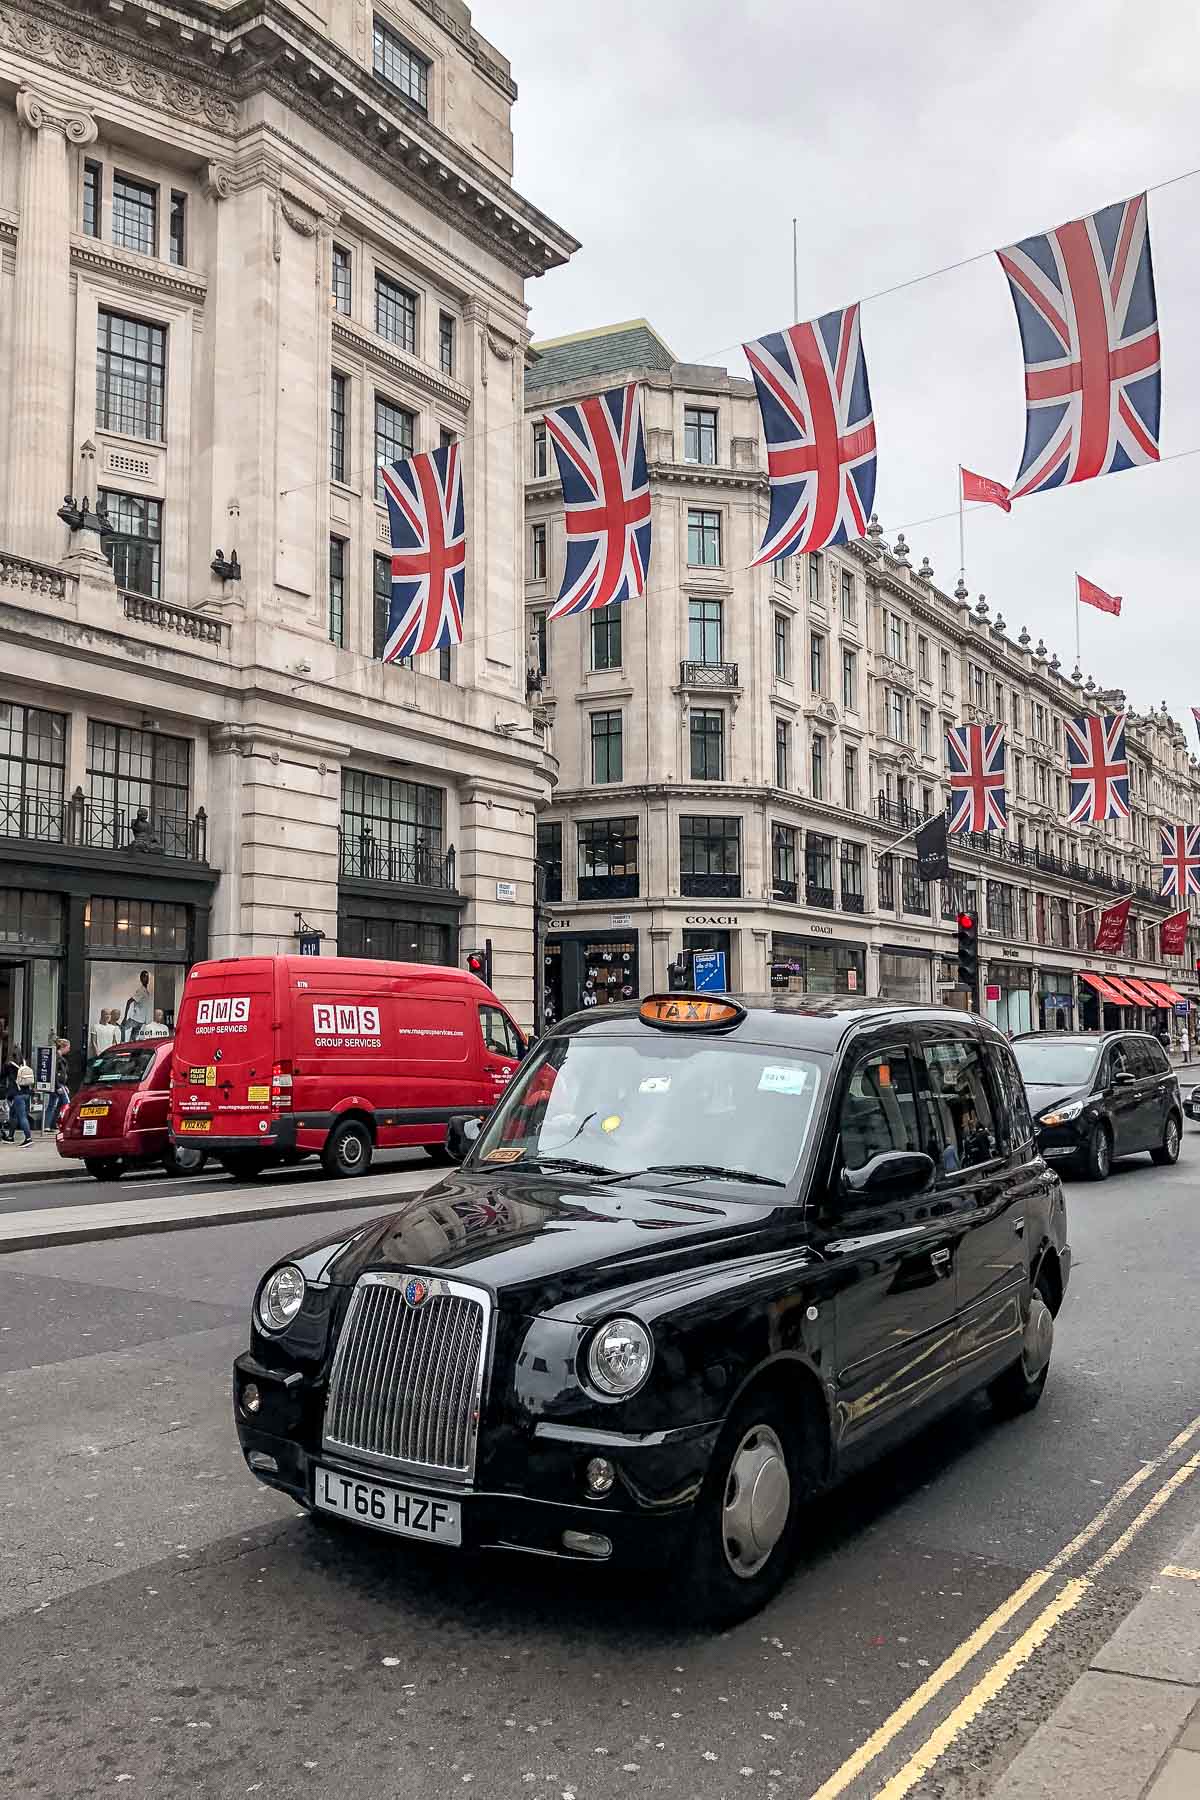 Black taxi on the Regent Street in London